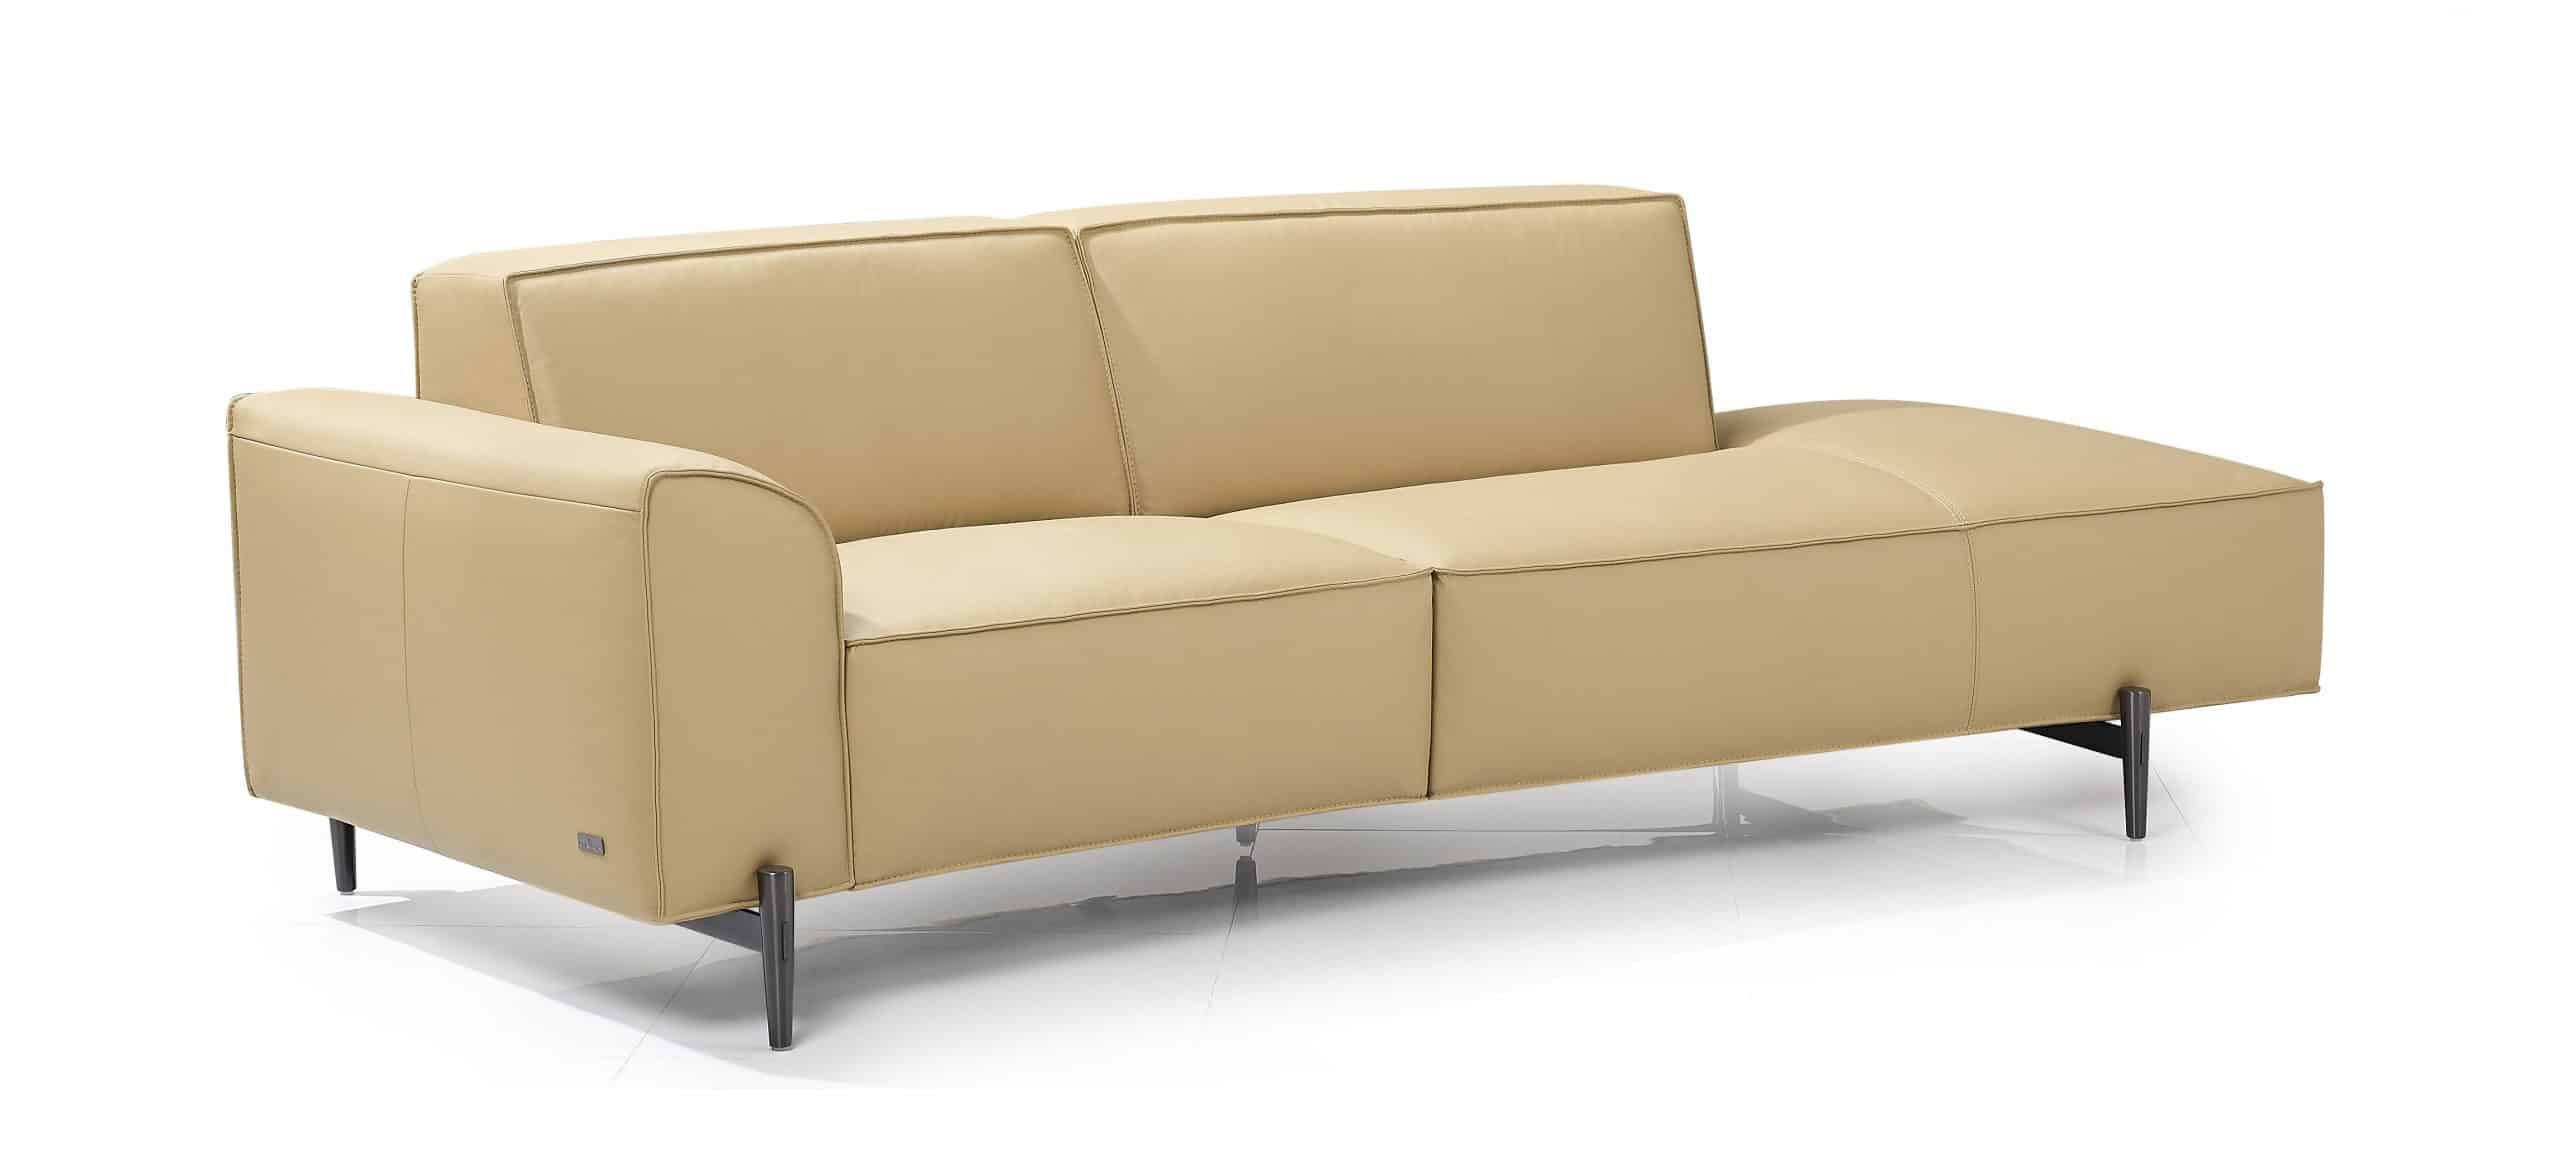 Grand sofá